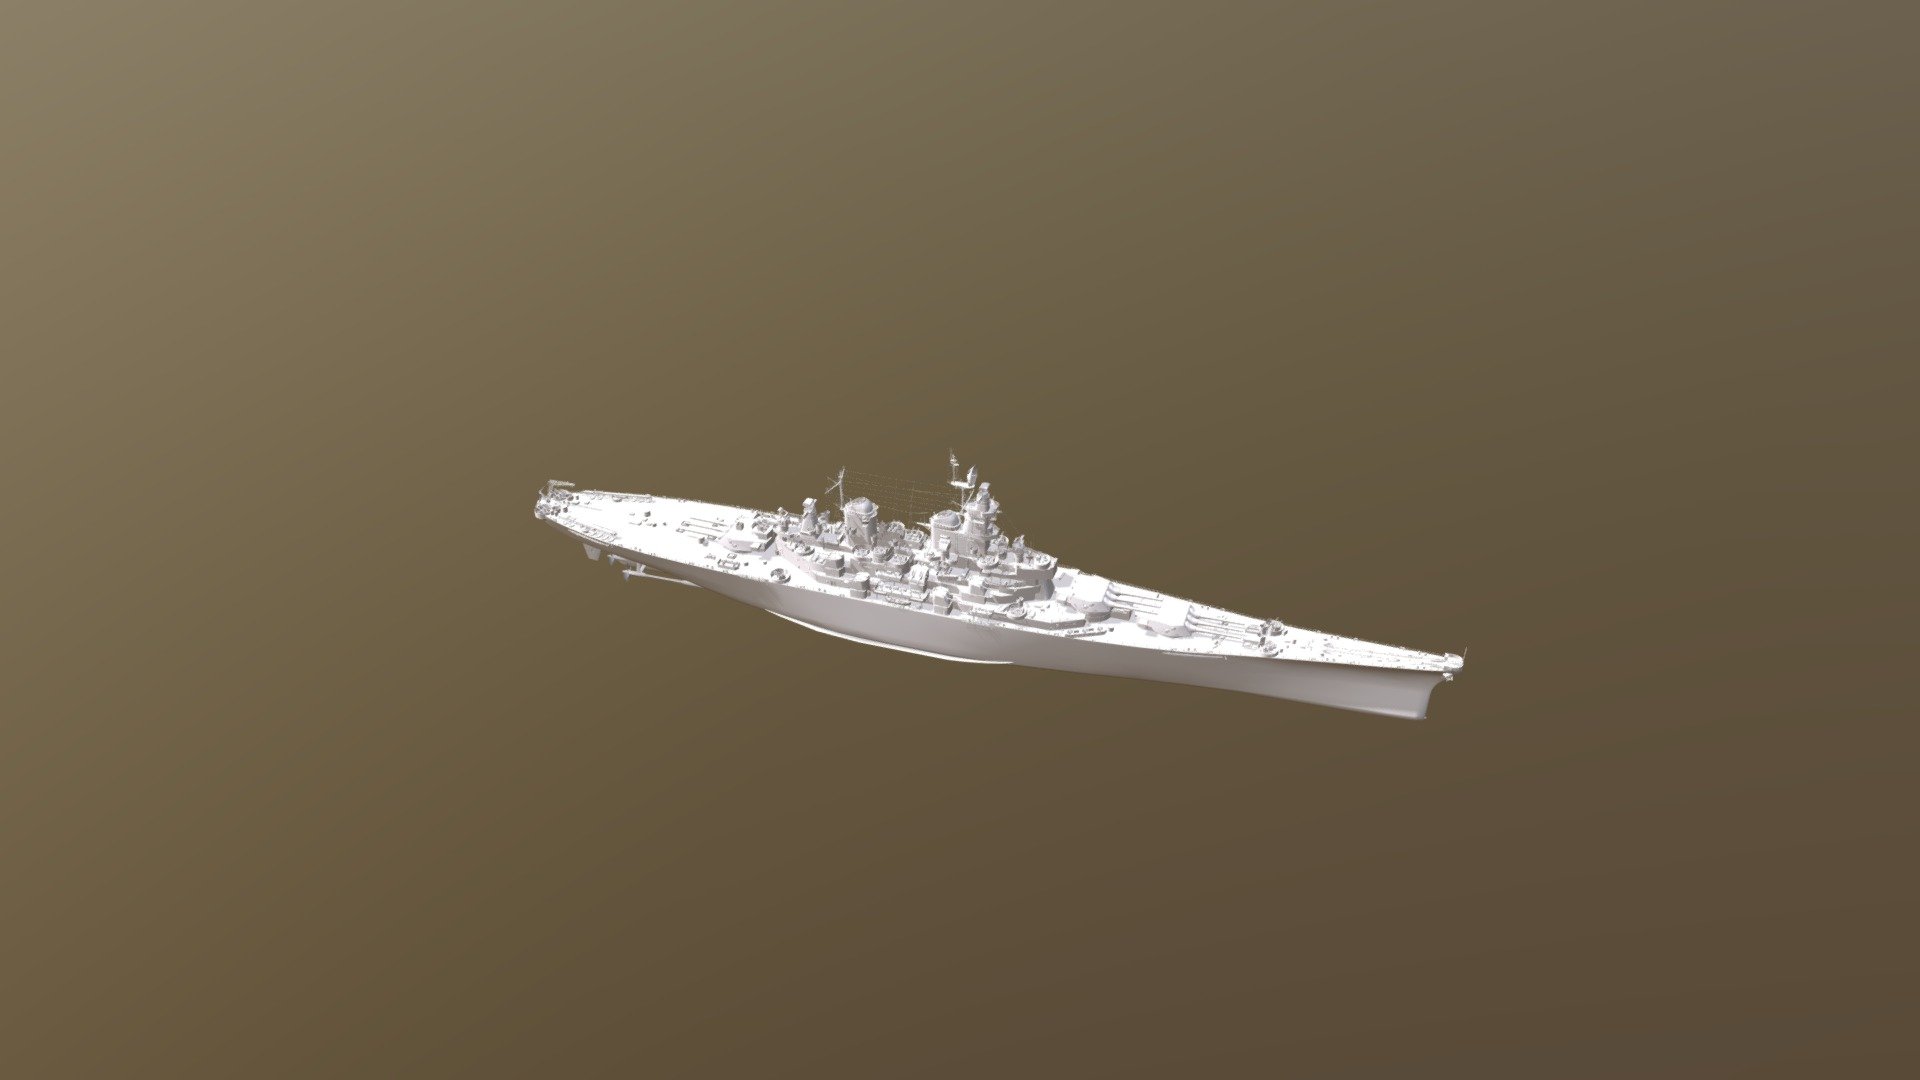 Iowa class battleship world of warships